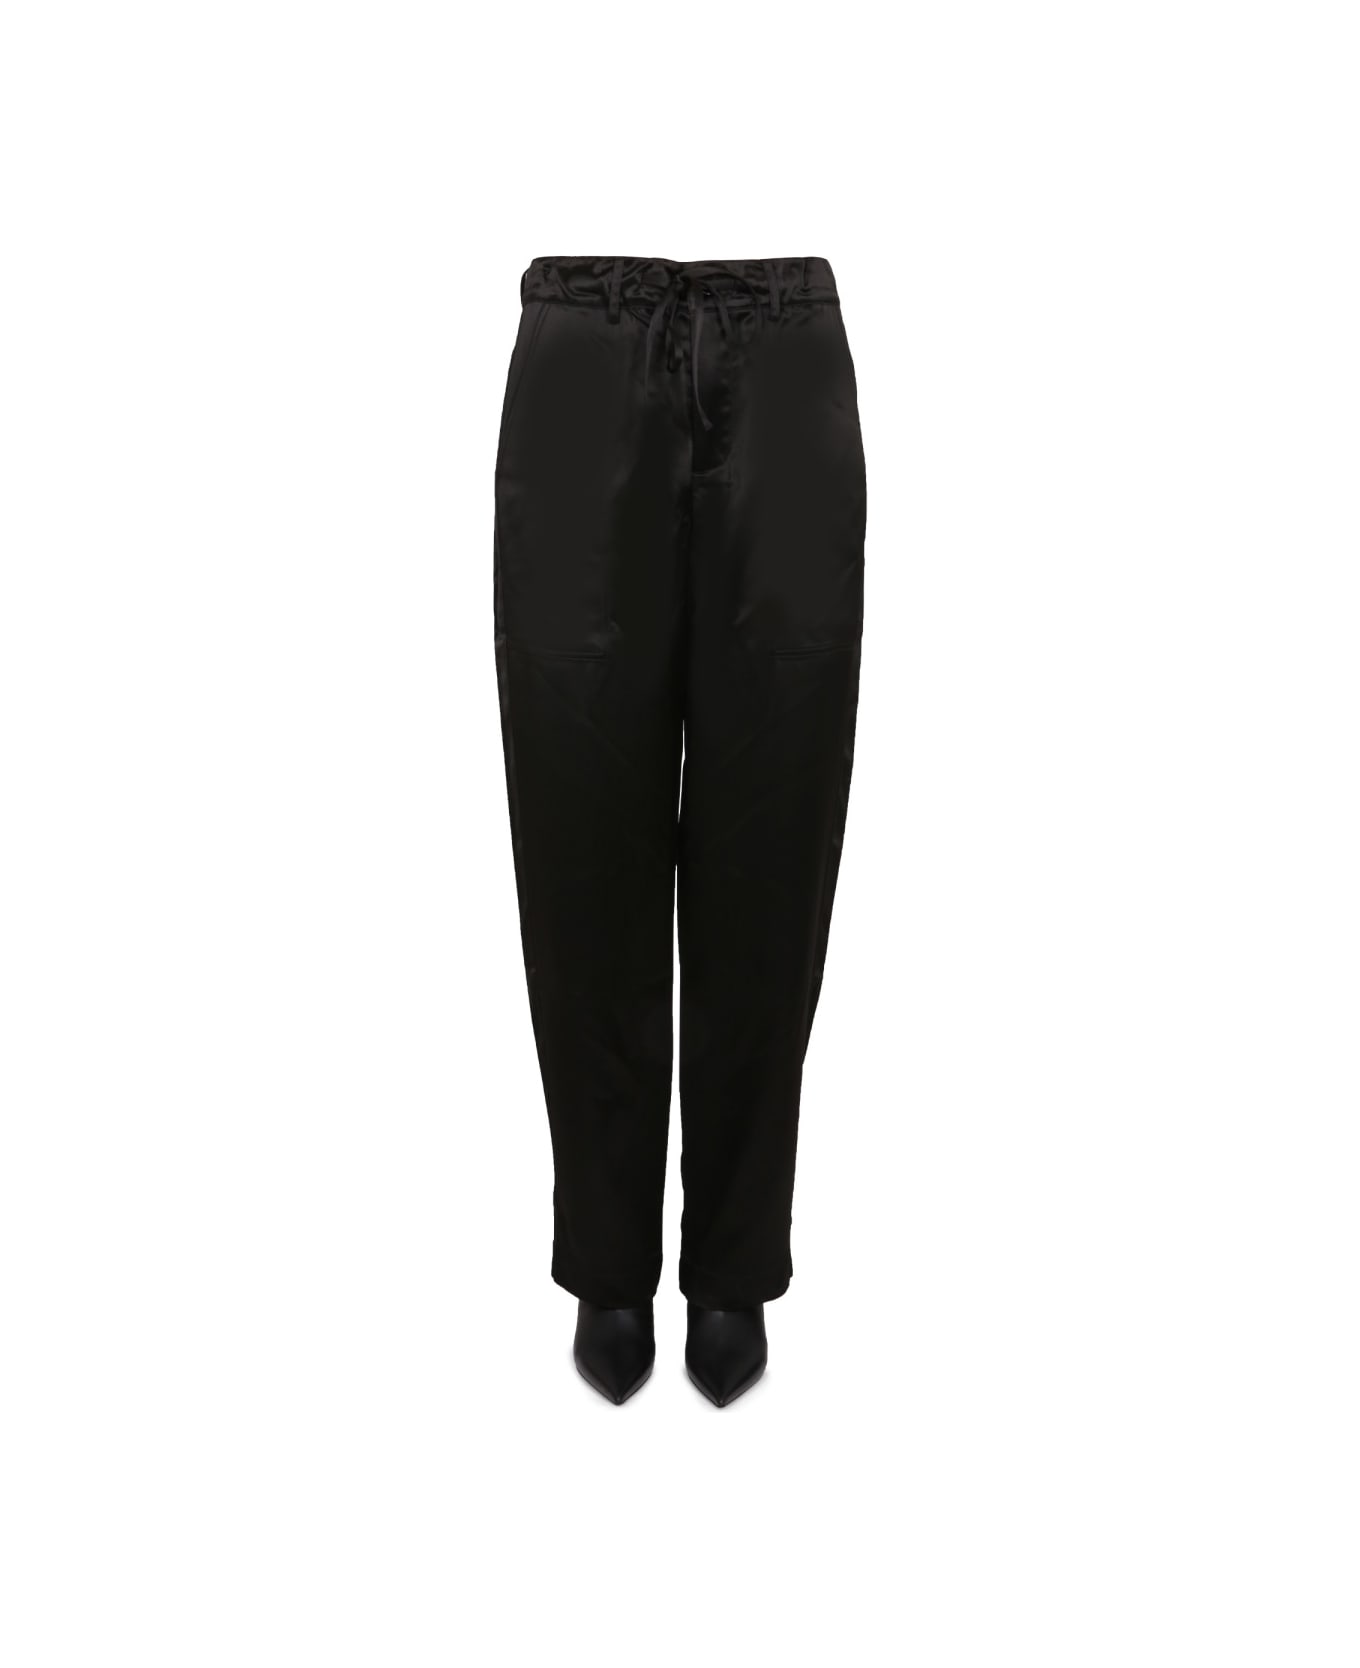 Proenza Schouler White Label Slouch Fit Pants - BLACK